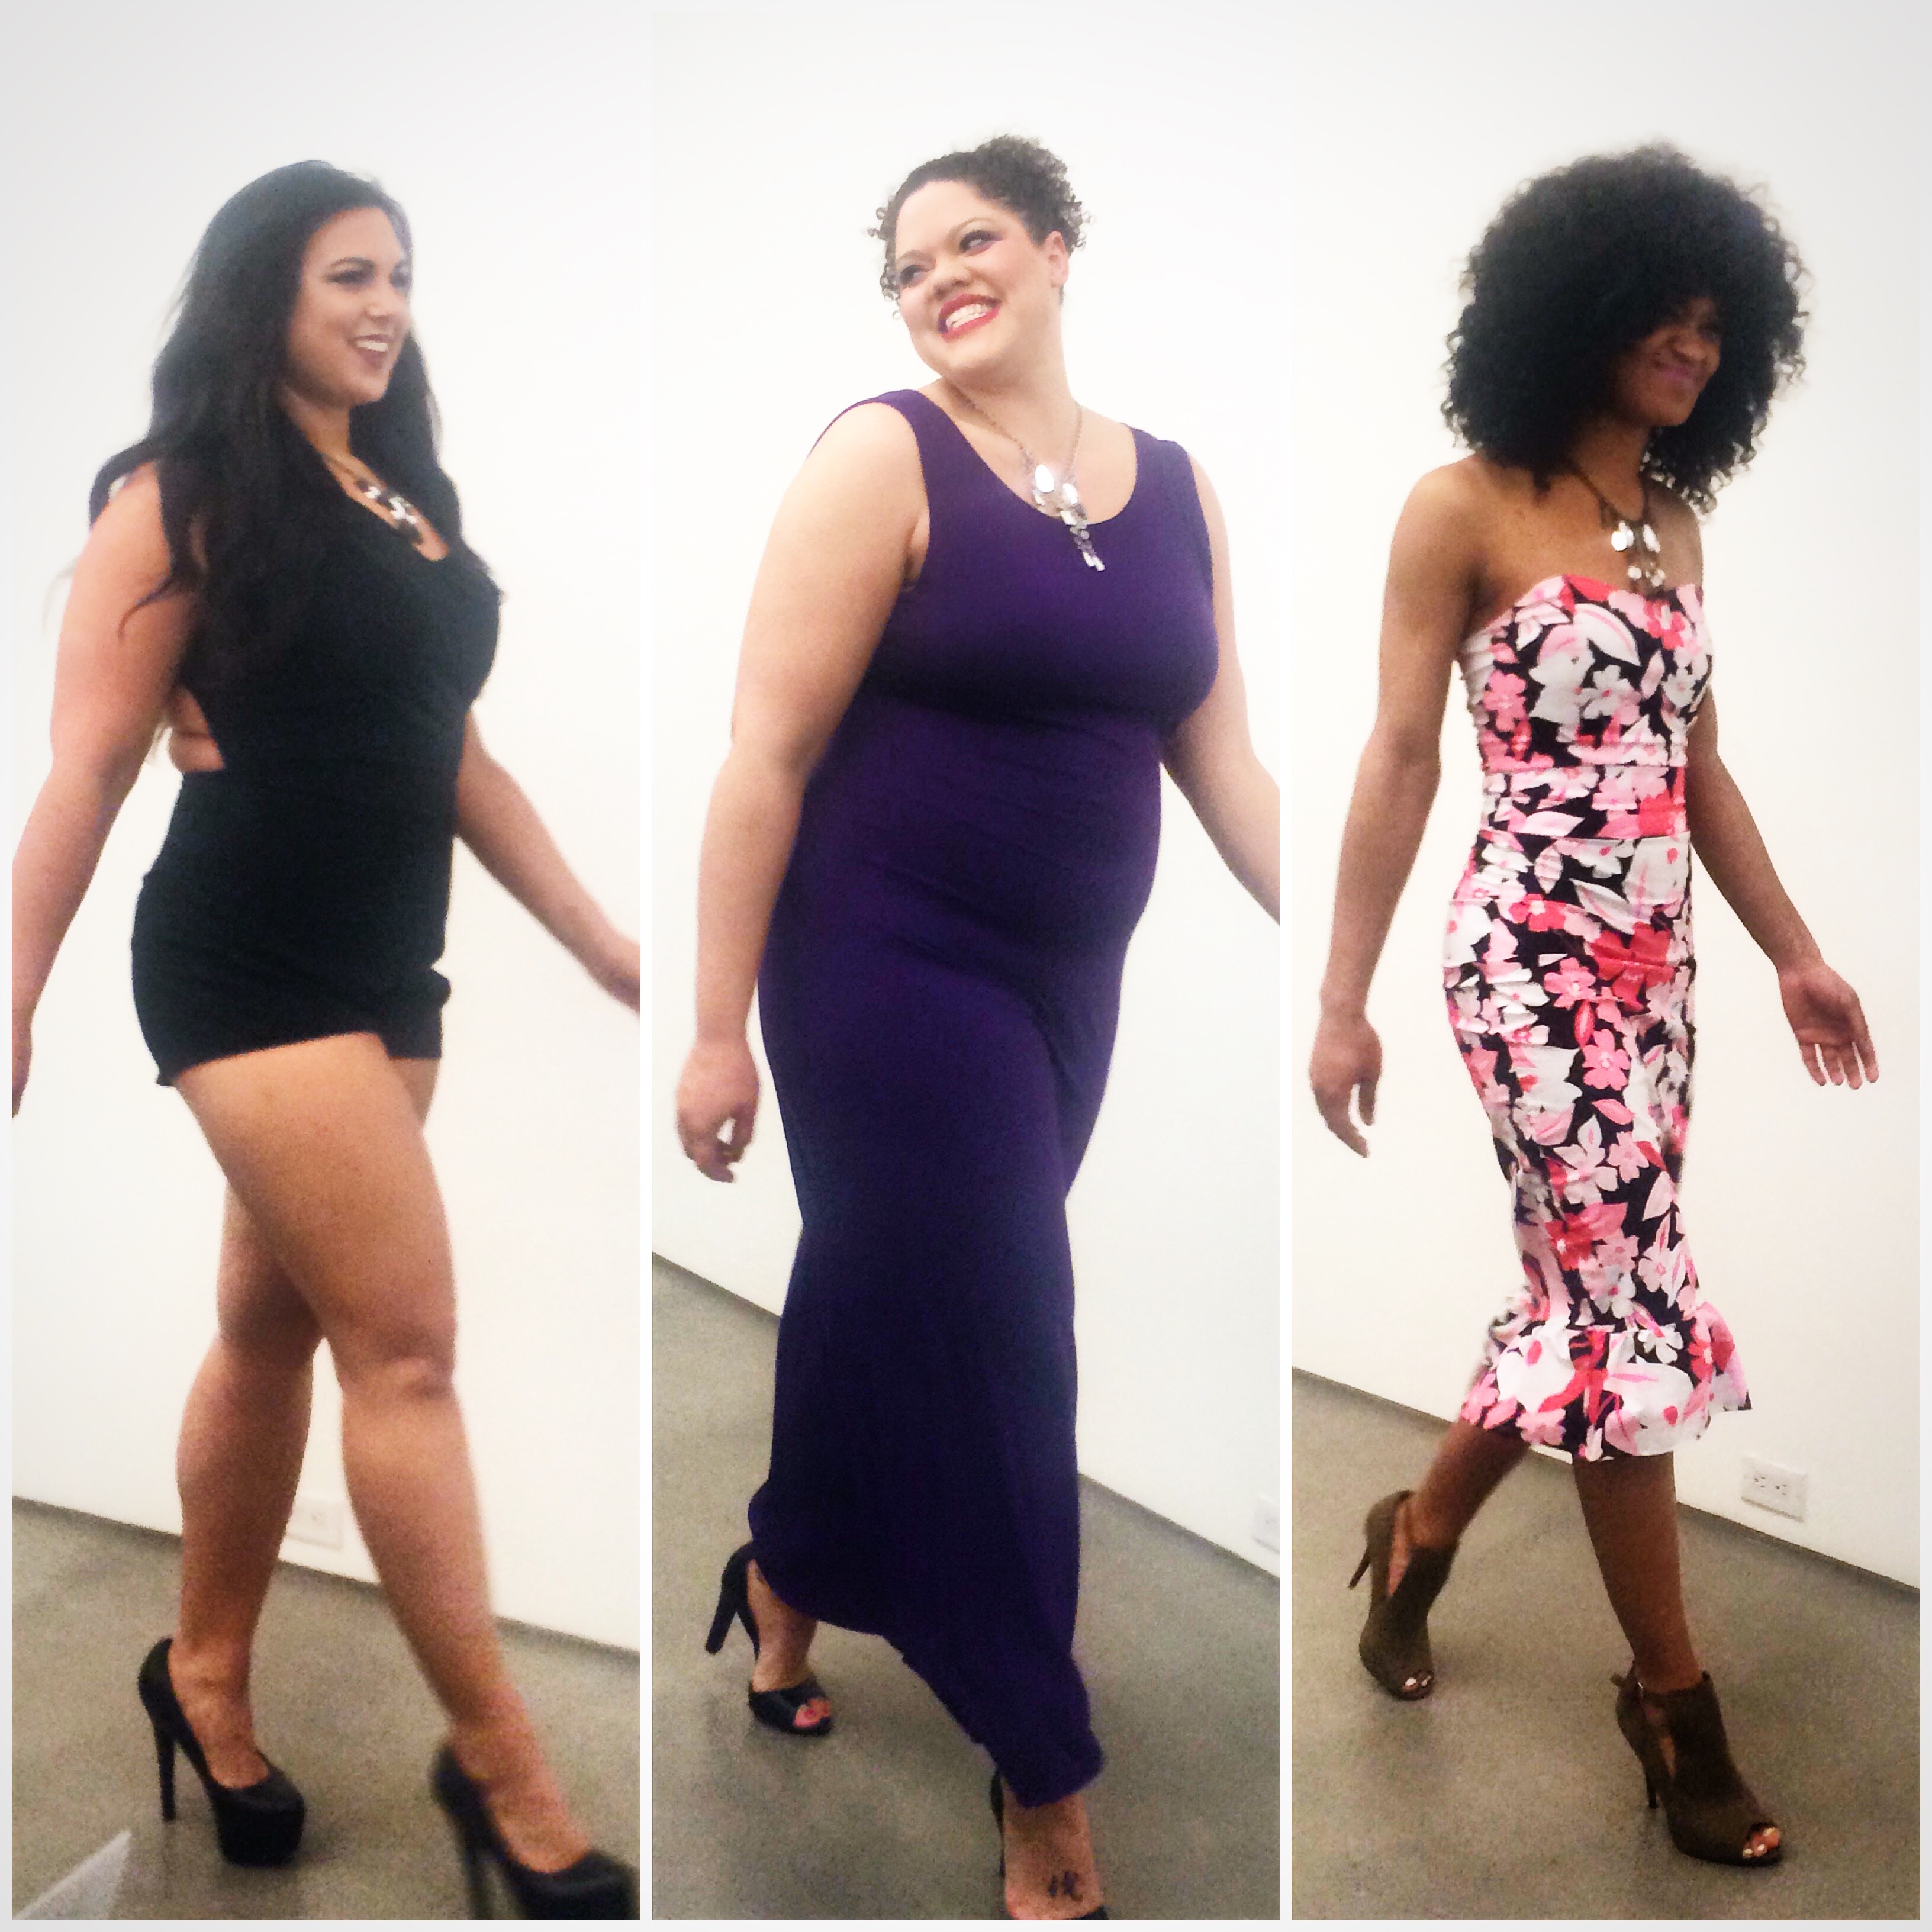 Body Positive Plus Size Models NYC NYFW Fashion Week Fashion Show Natural Hair Curvy Woman Runway